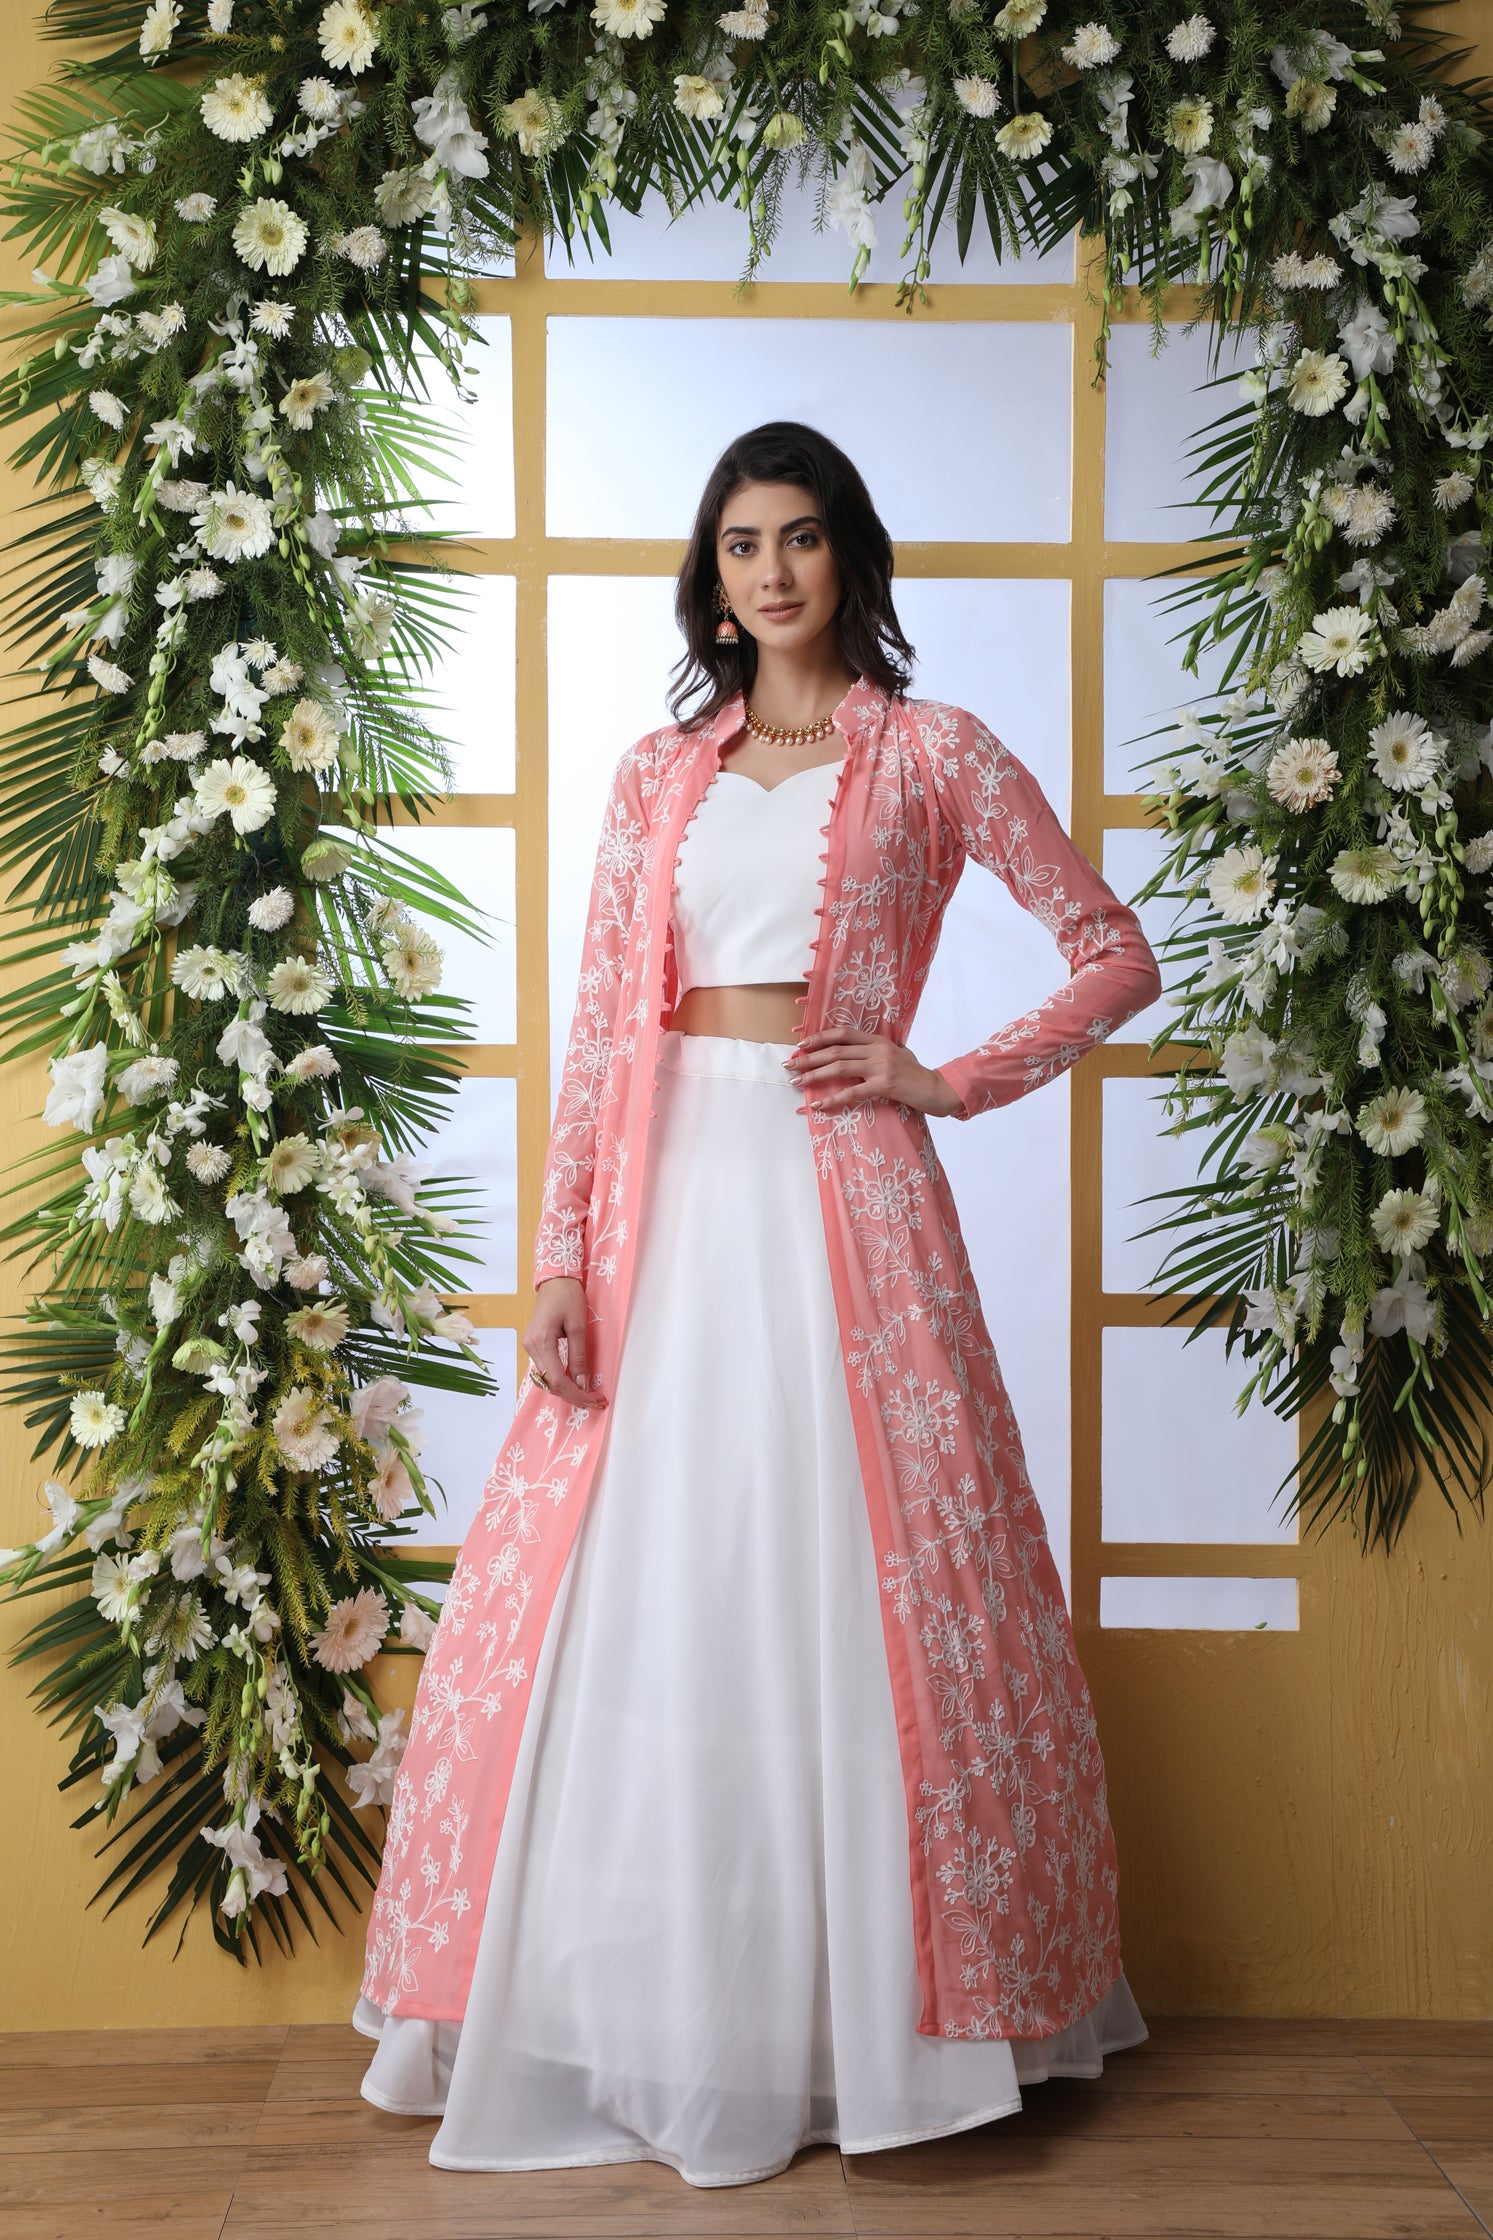 100 Latest Wedding Lehenga Designs for Indian Bride - LooksGud.com | Indian  wedding dress modern, Wedding lehenga designs, Indian wedding gowns